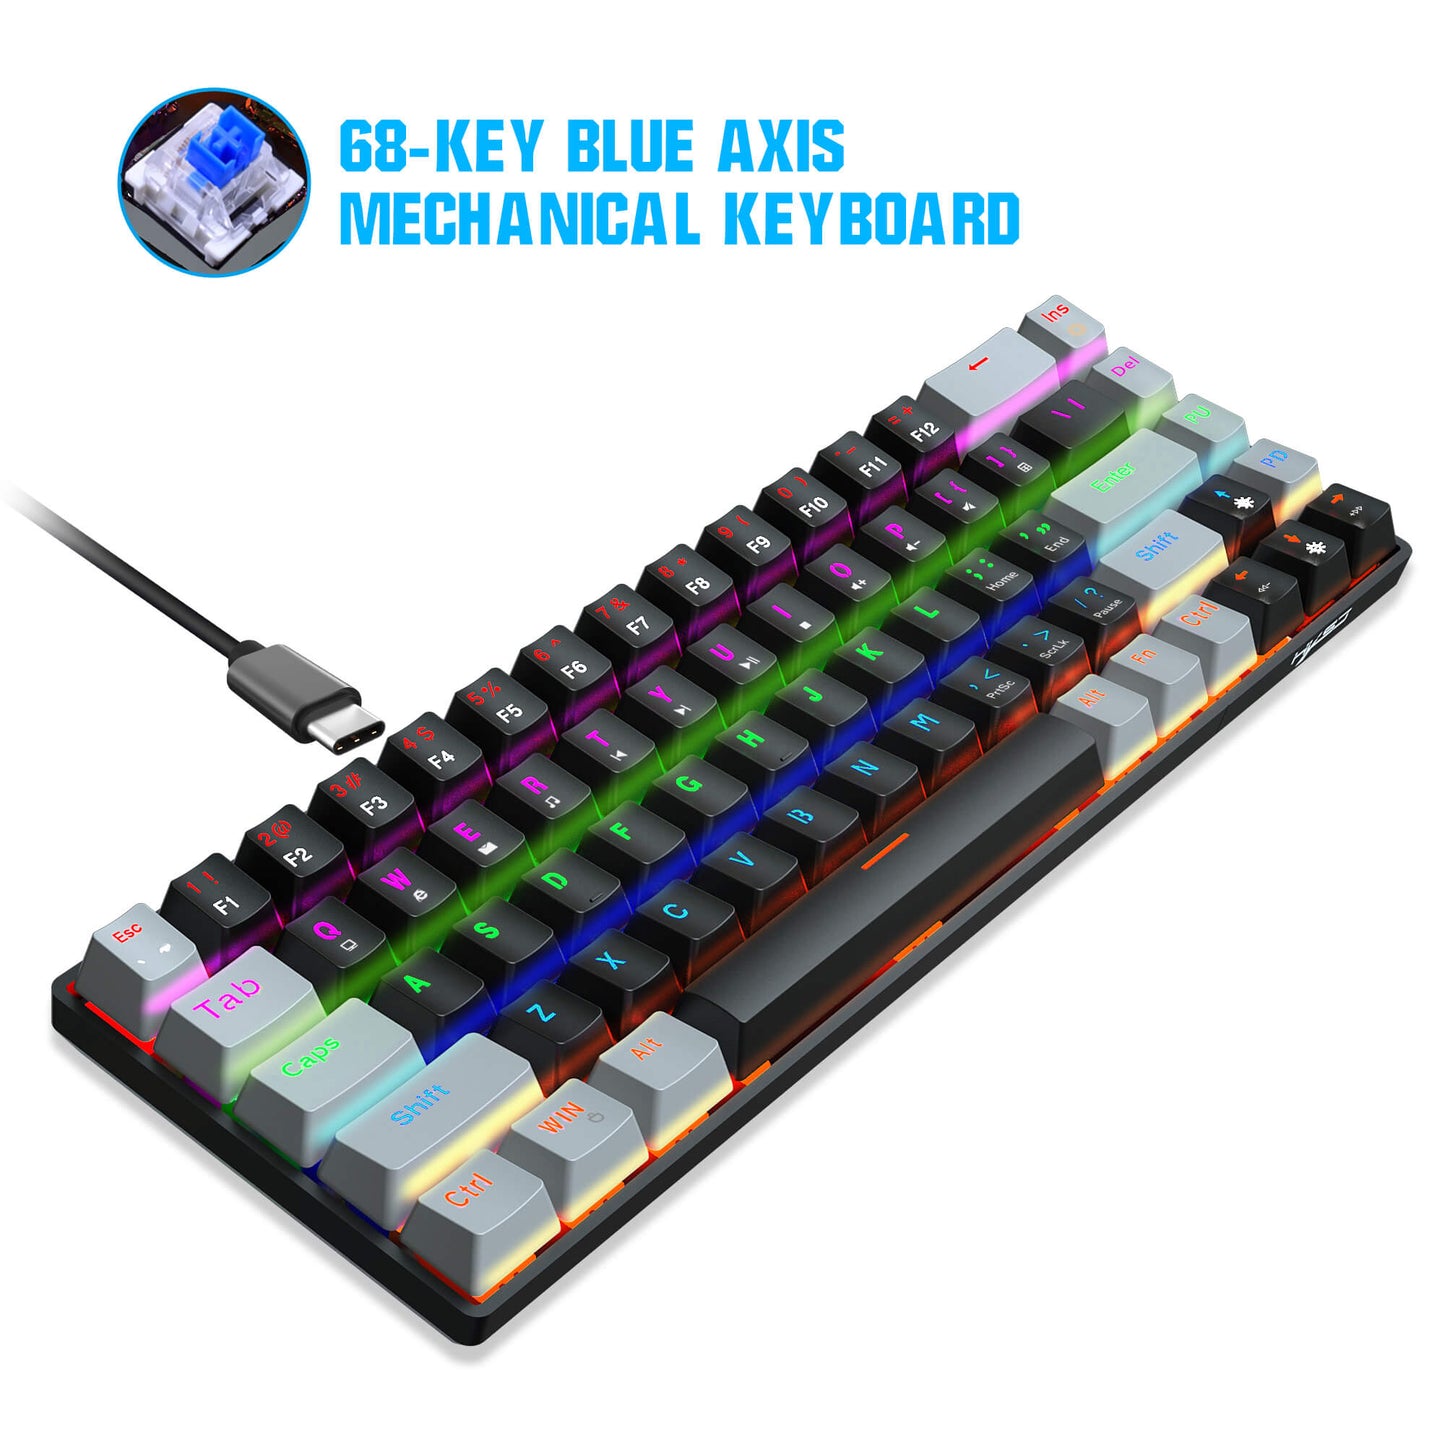 68 key mechnical keyboard